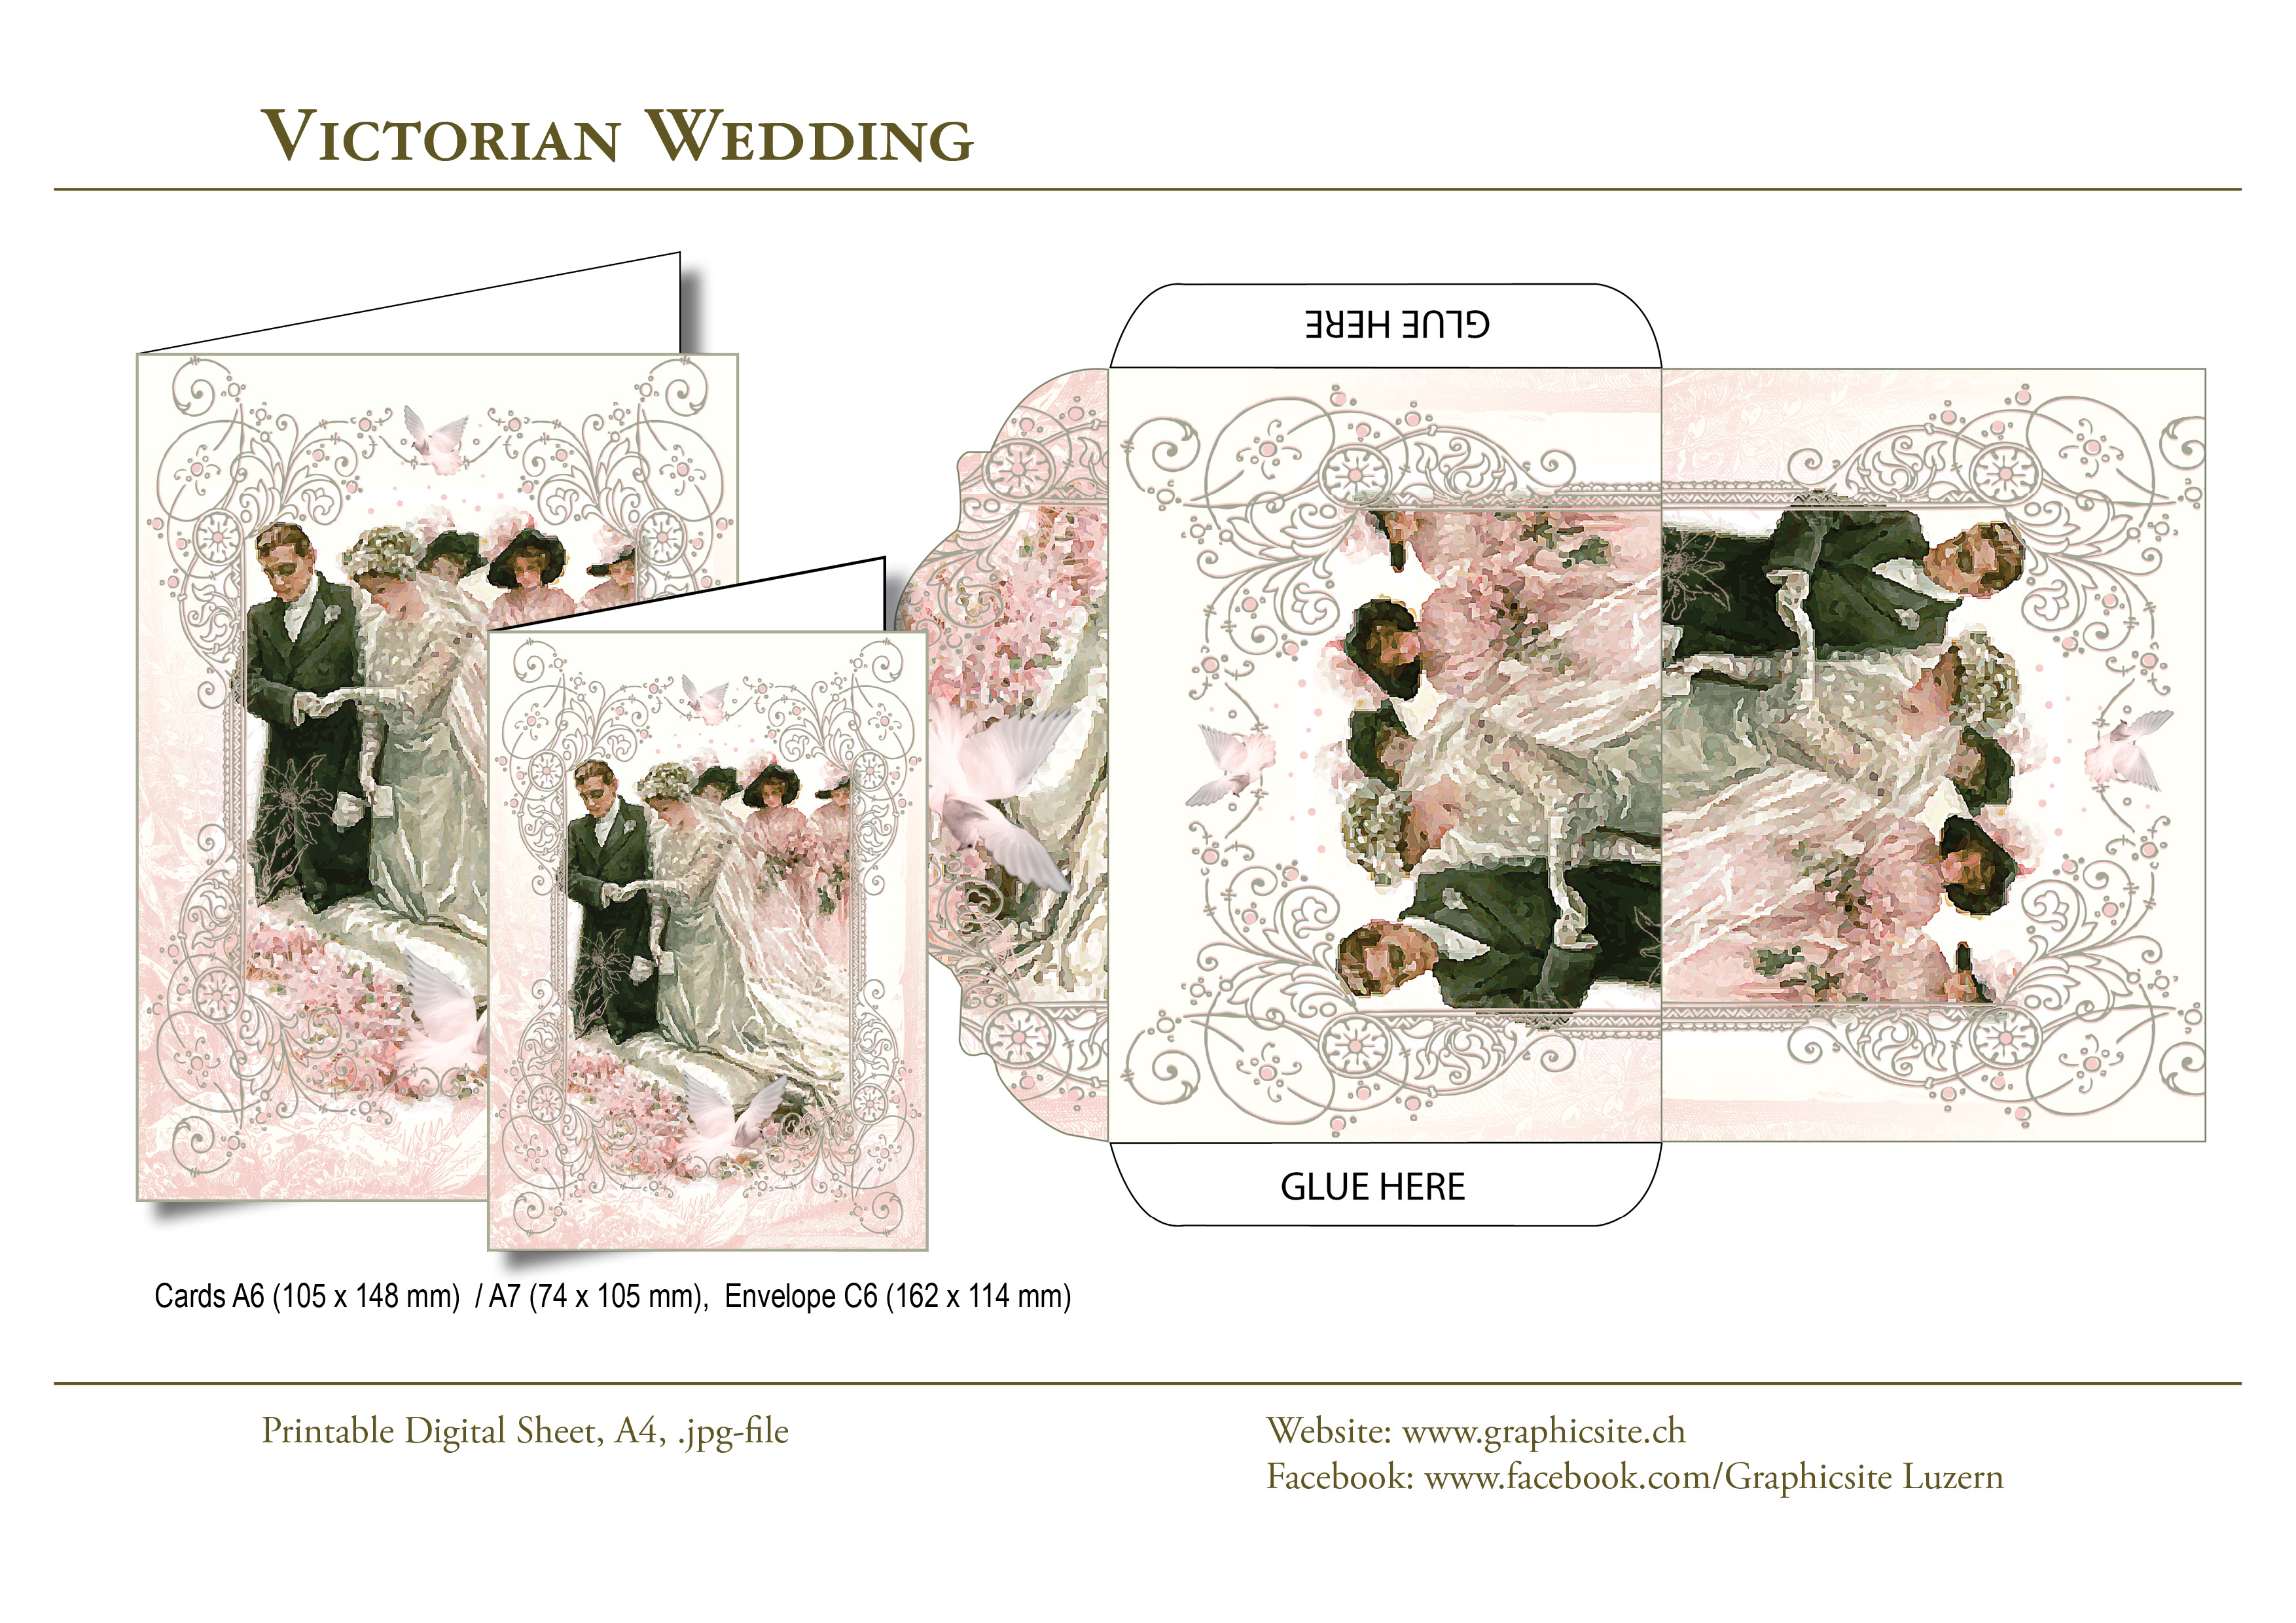 Printable Digital Sheet - DIN A-Formats - Victorian Wedding